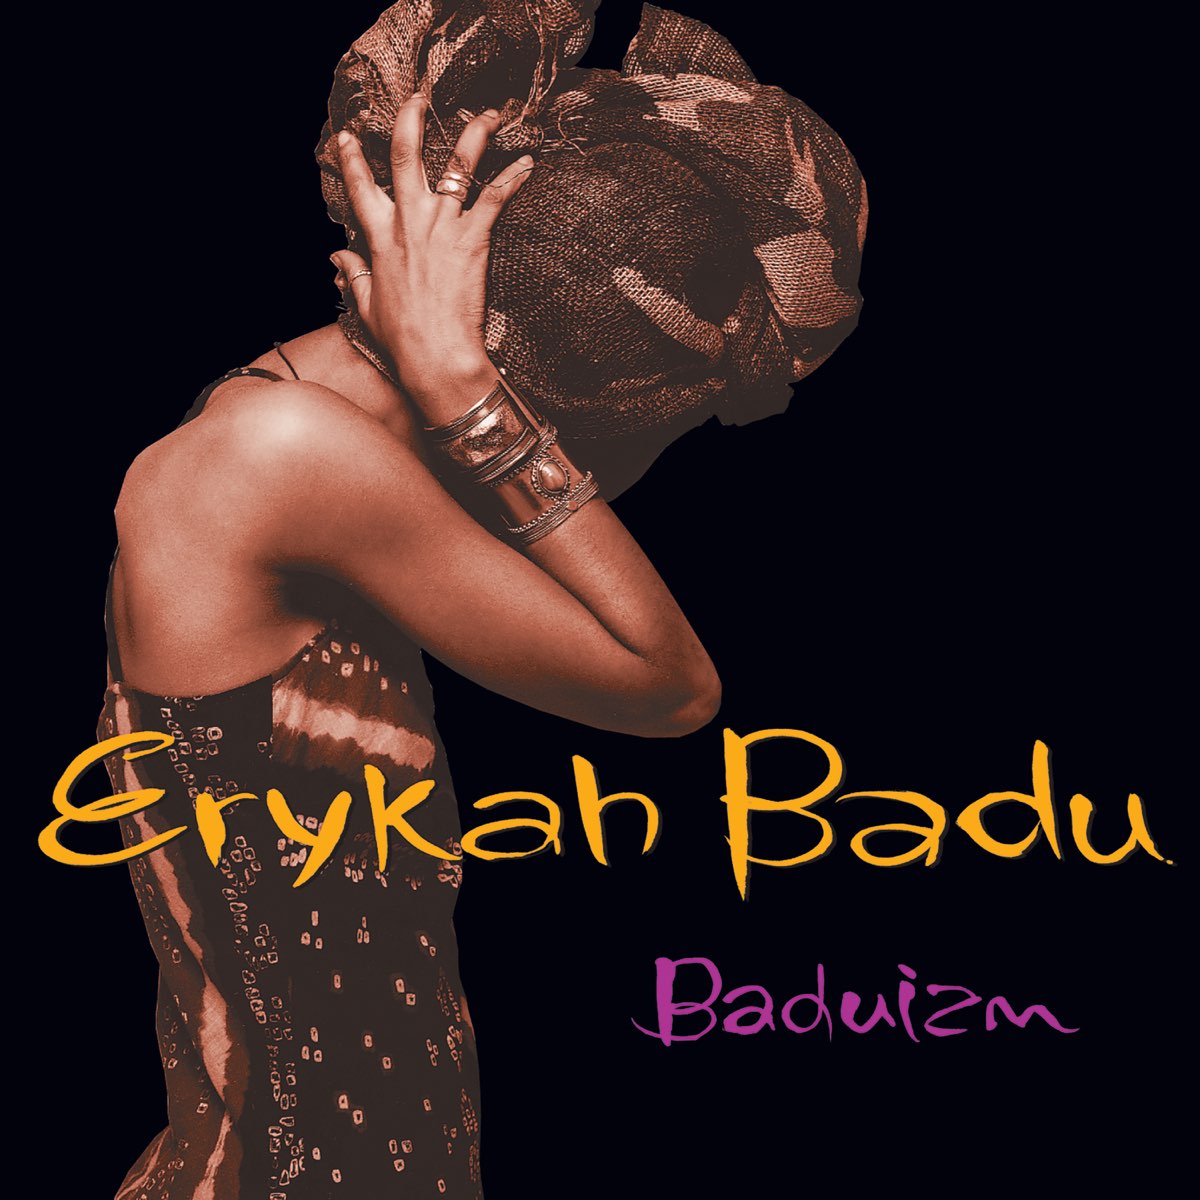 Альбом "Baduizm" (Erykah Badu) .